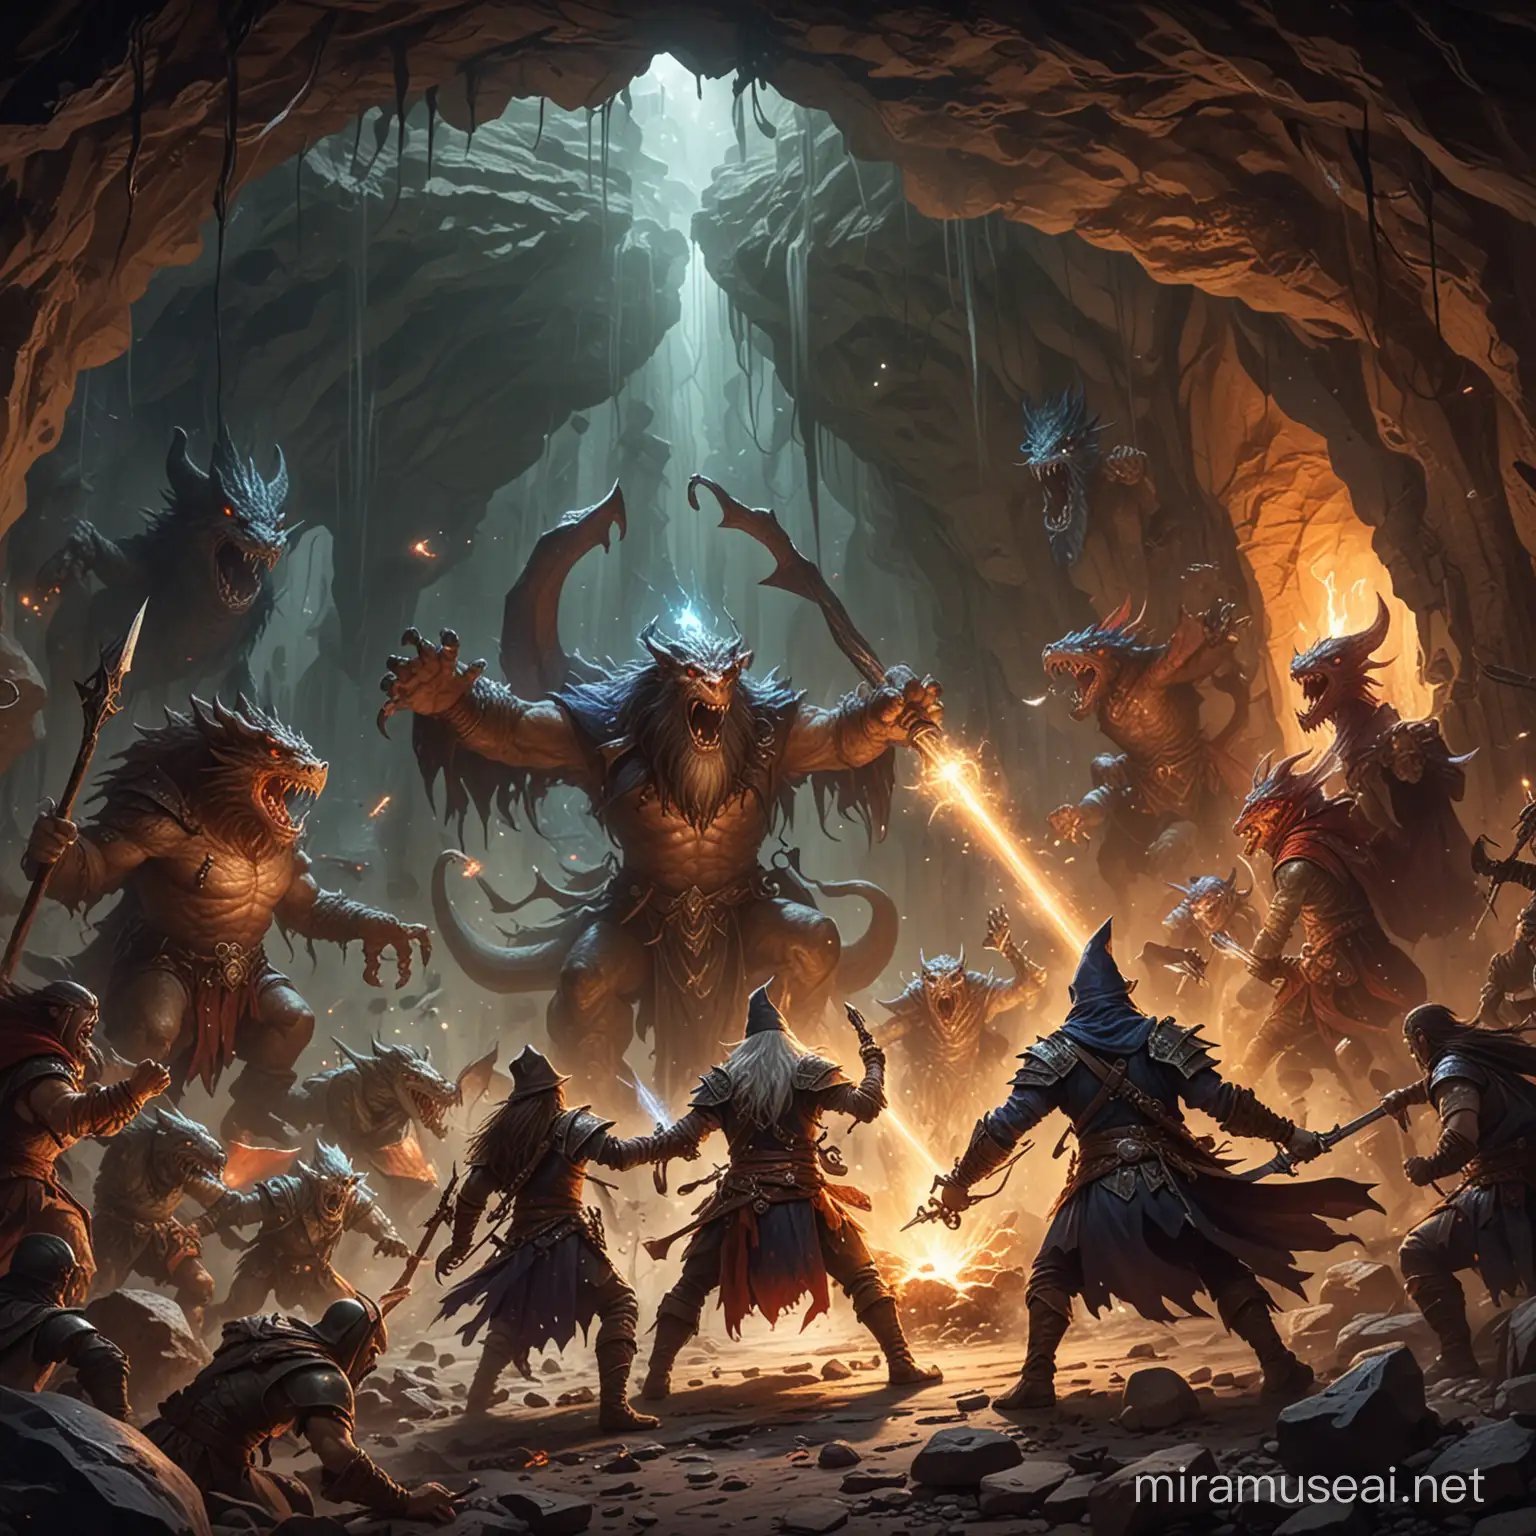 Wizard Battling Monsters in a Dark Cave Adventure